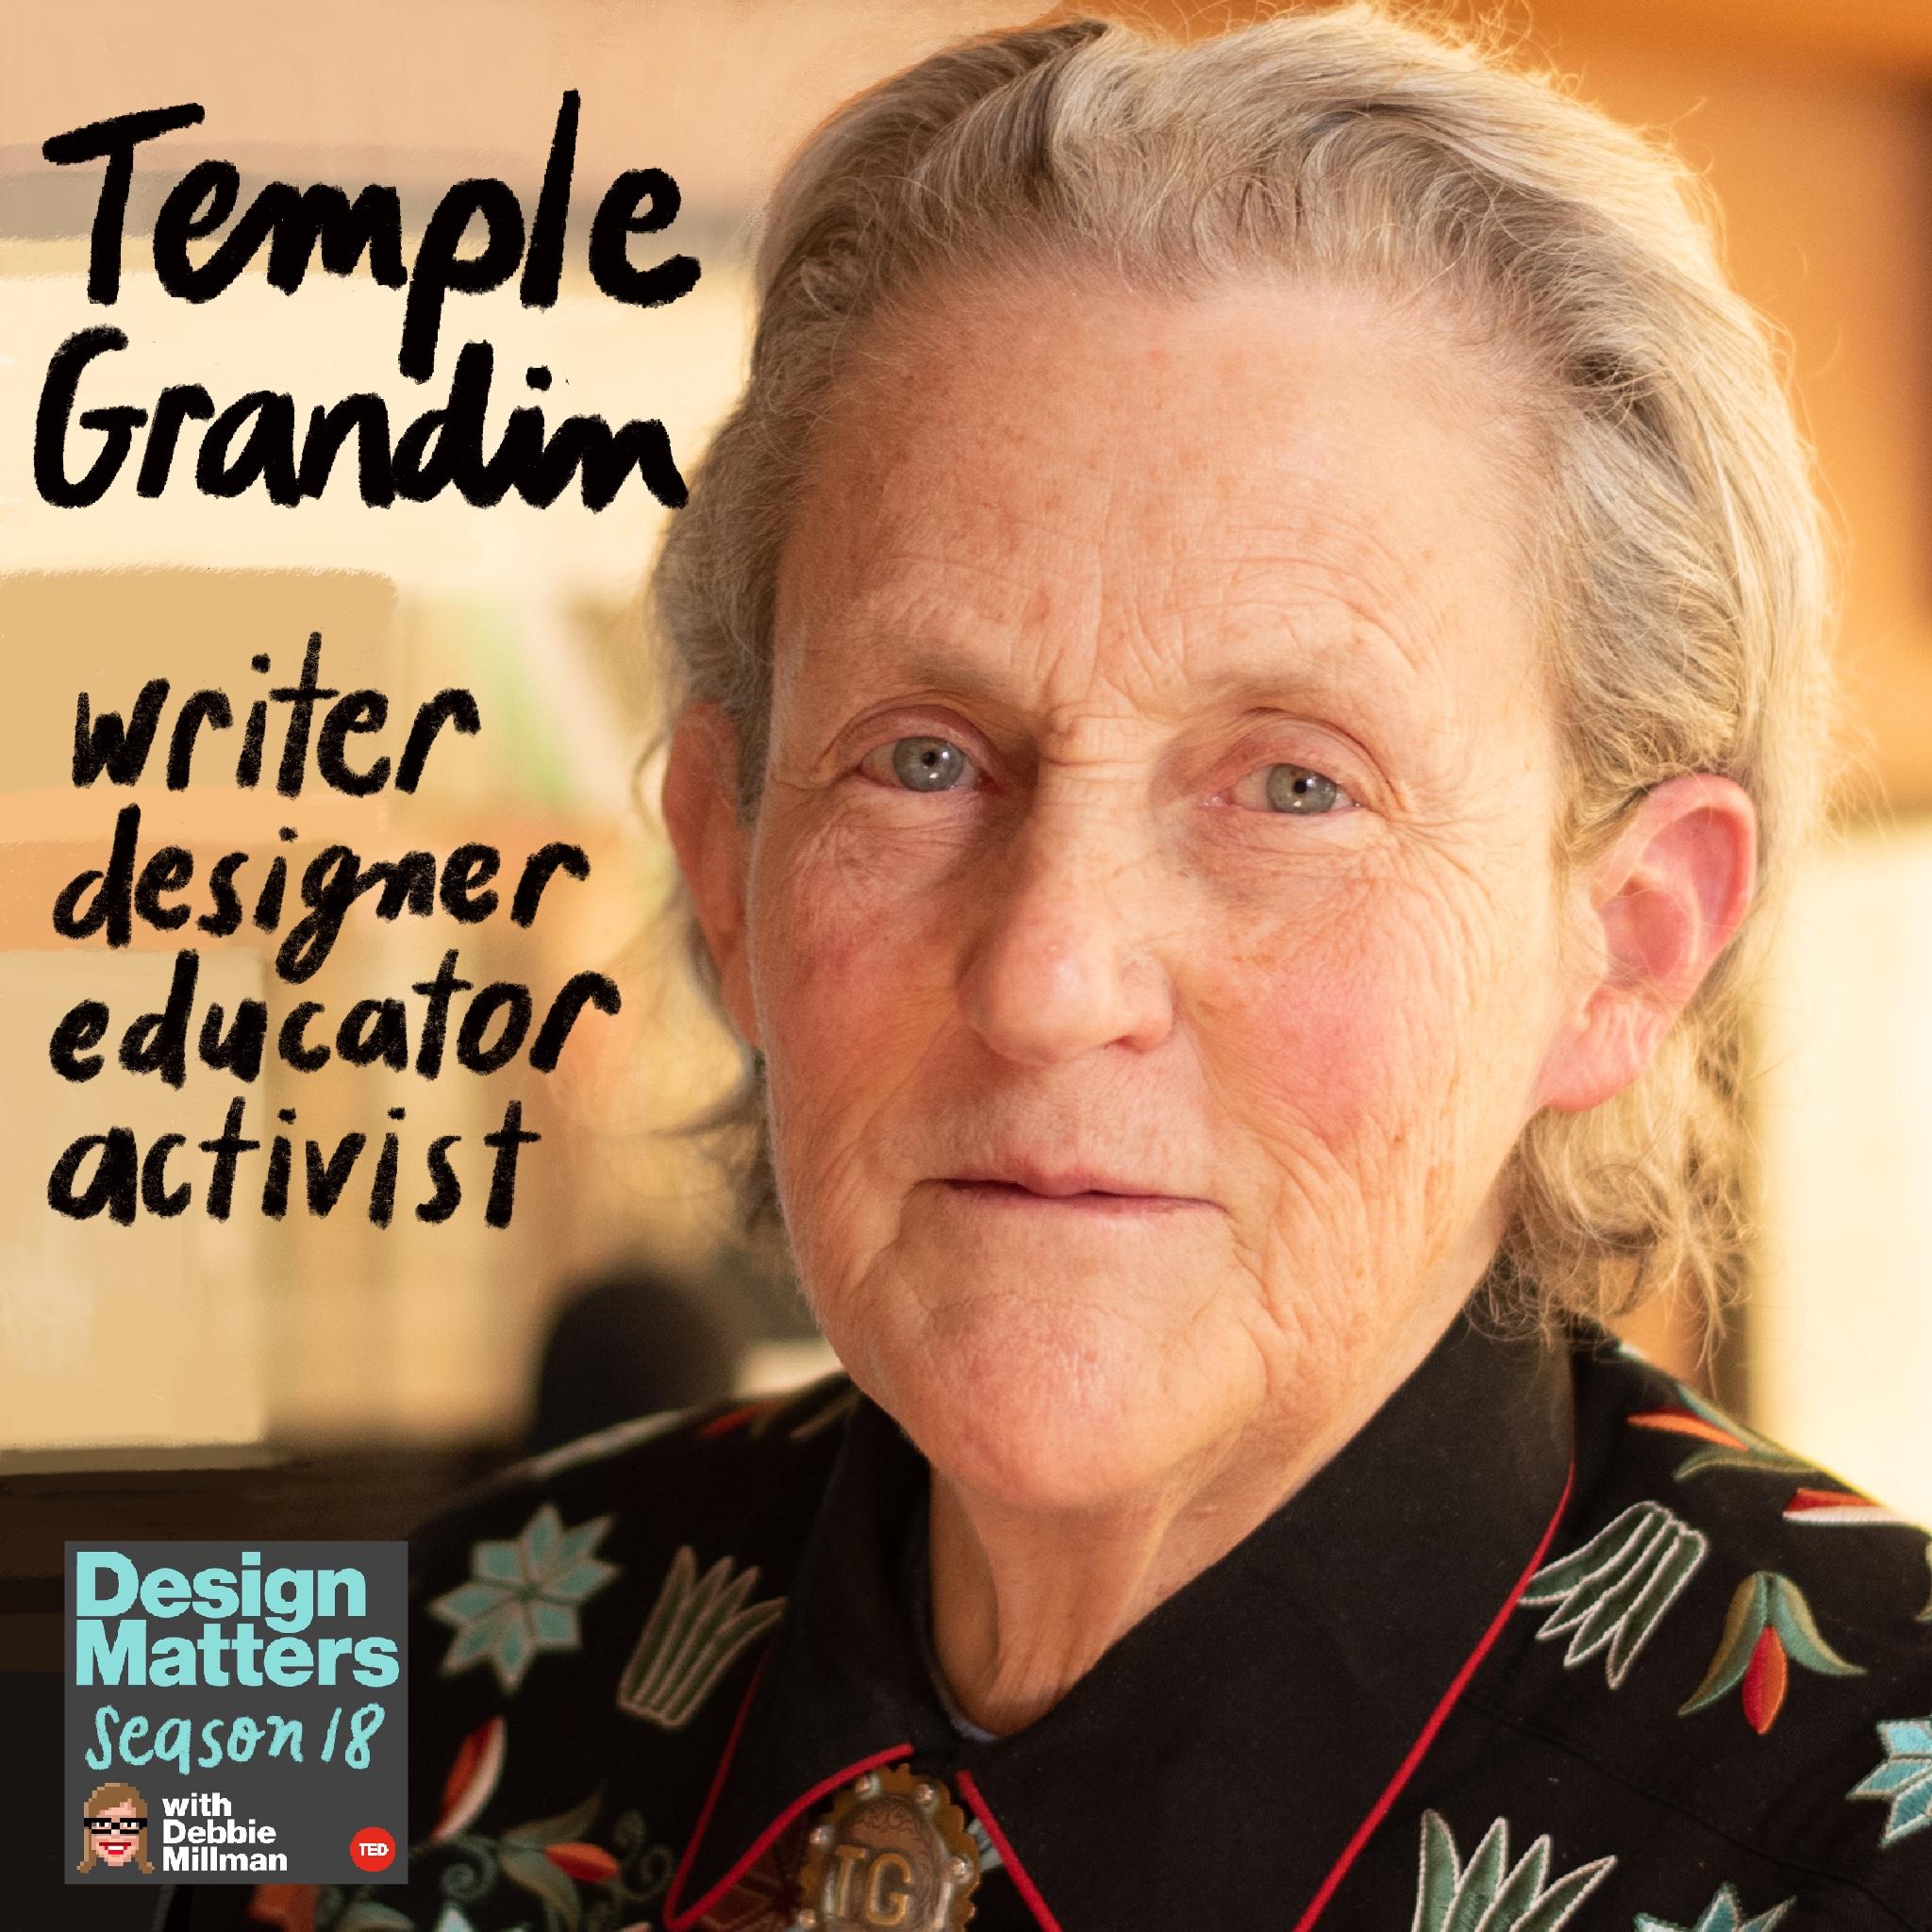 Thumbnail for "Best of Design Matters: Dr. Temple Grandin".